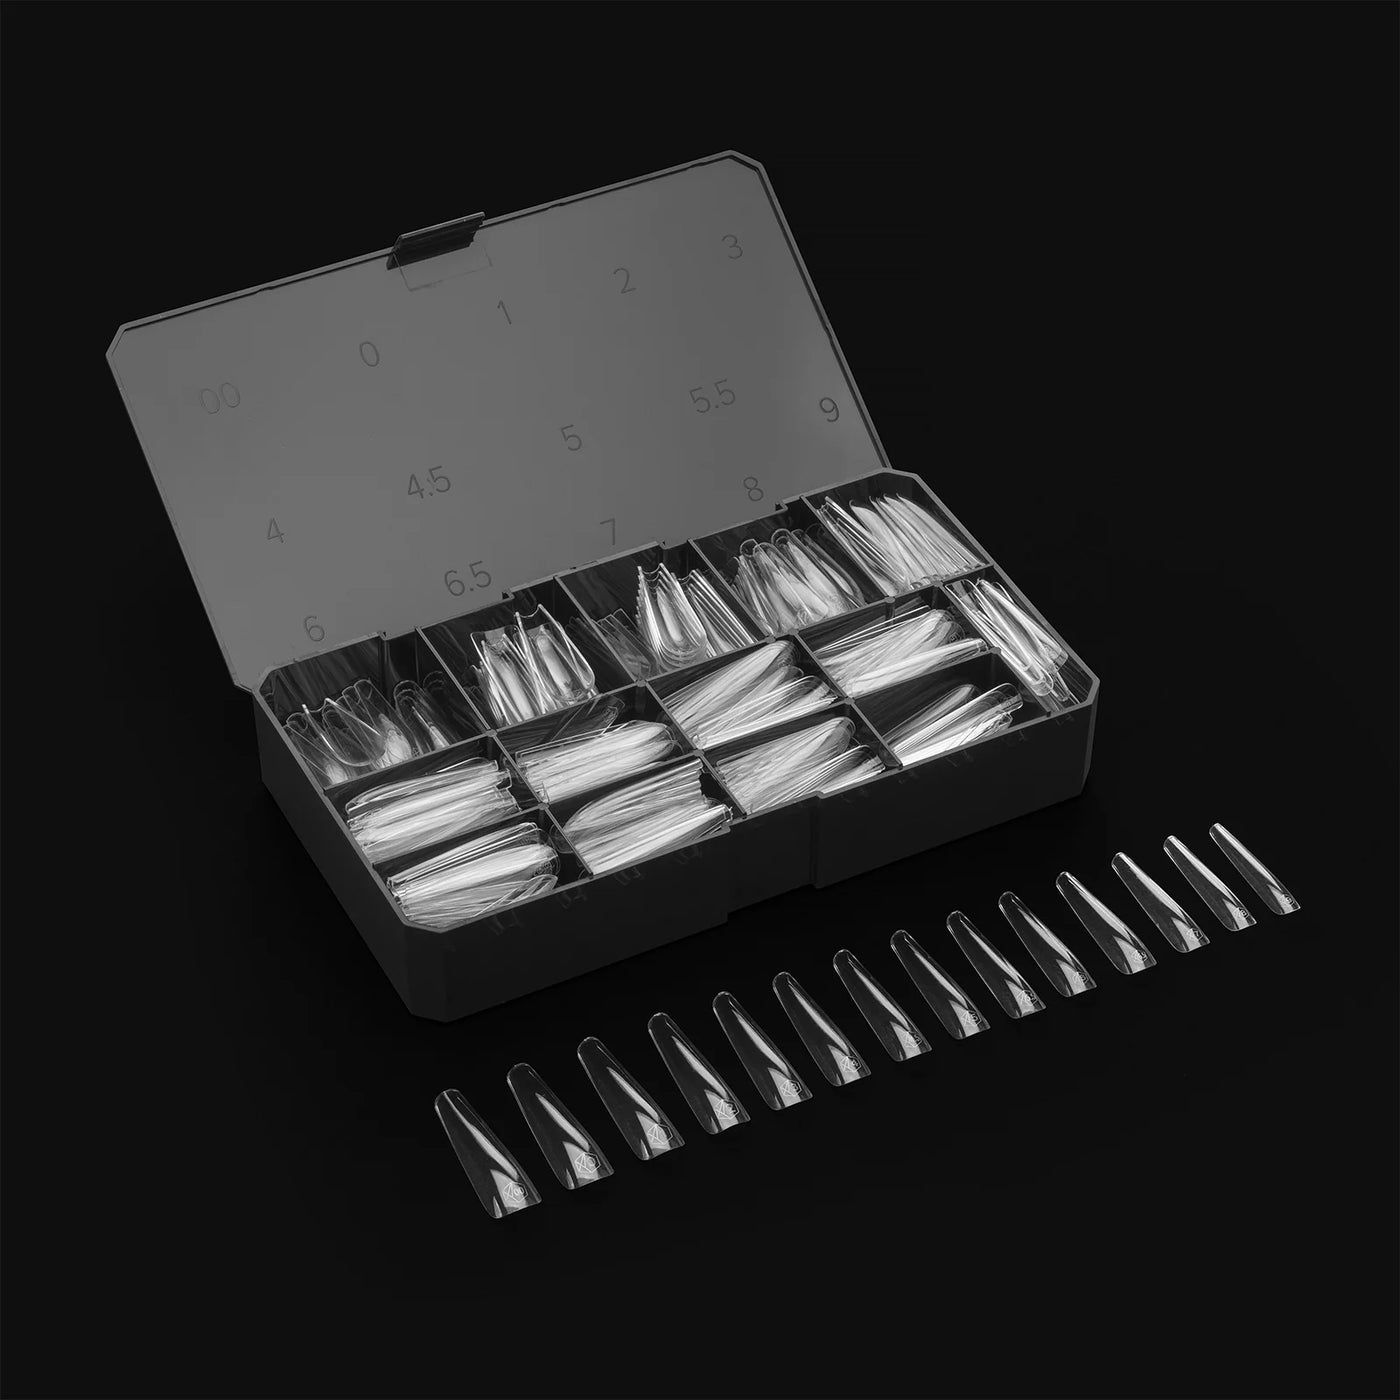 APRES - Gel-X® Sculpted Coffin Extra Long Box of Tips (420pcs)